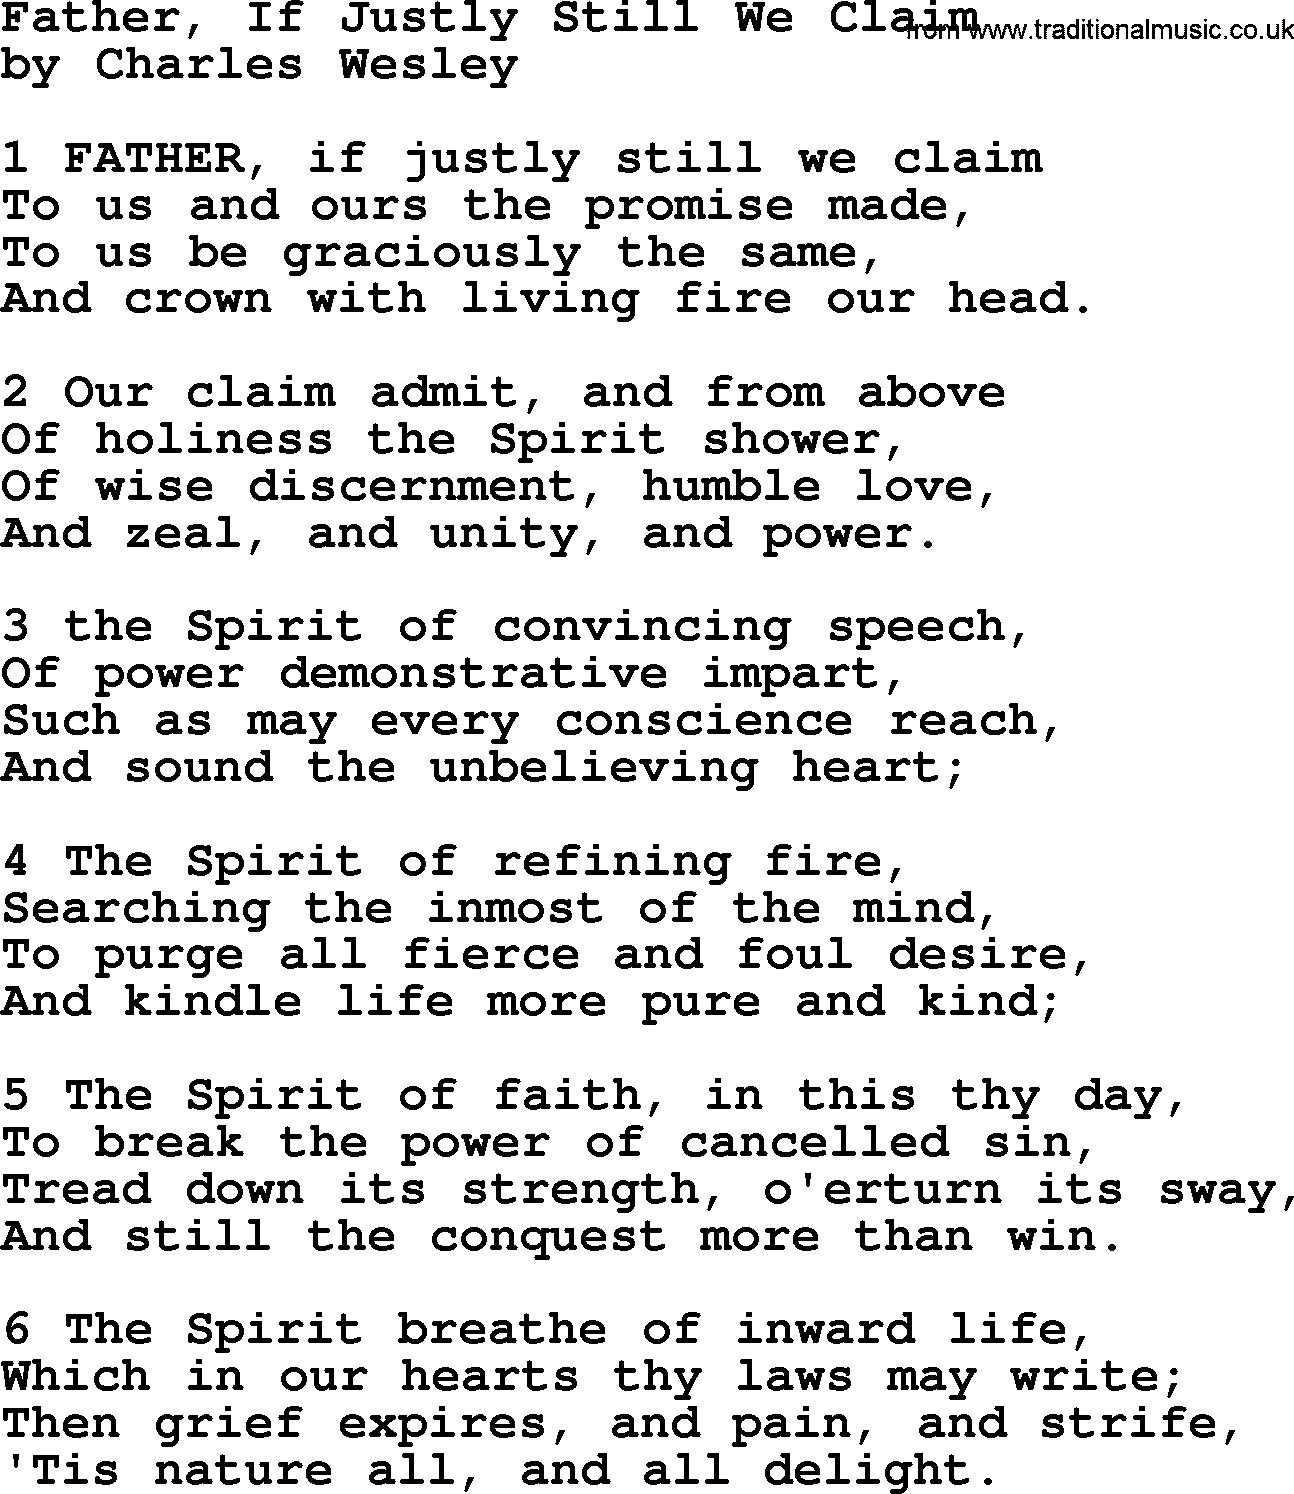 Charles Wesley hymn: Father, If Justly Still We Claim, lyrics